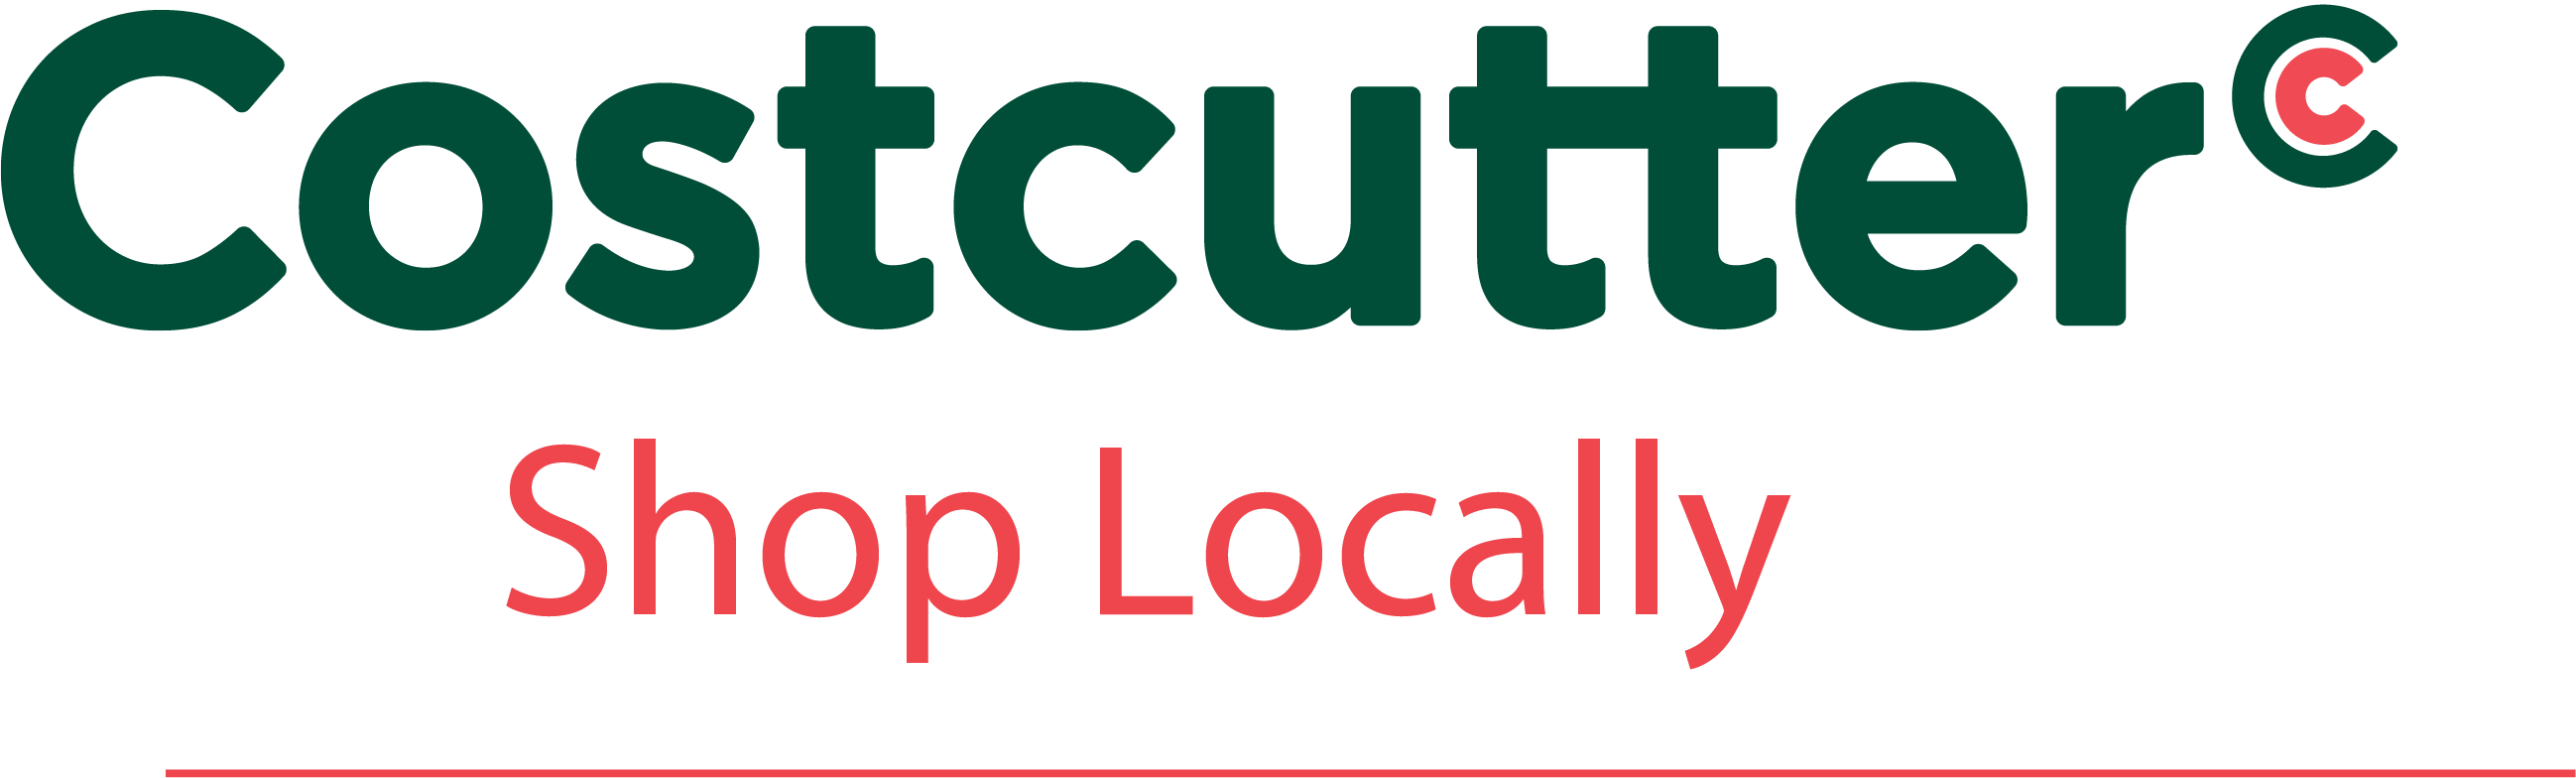 Costcutter - Shop Locally